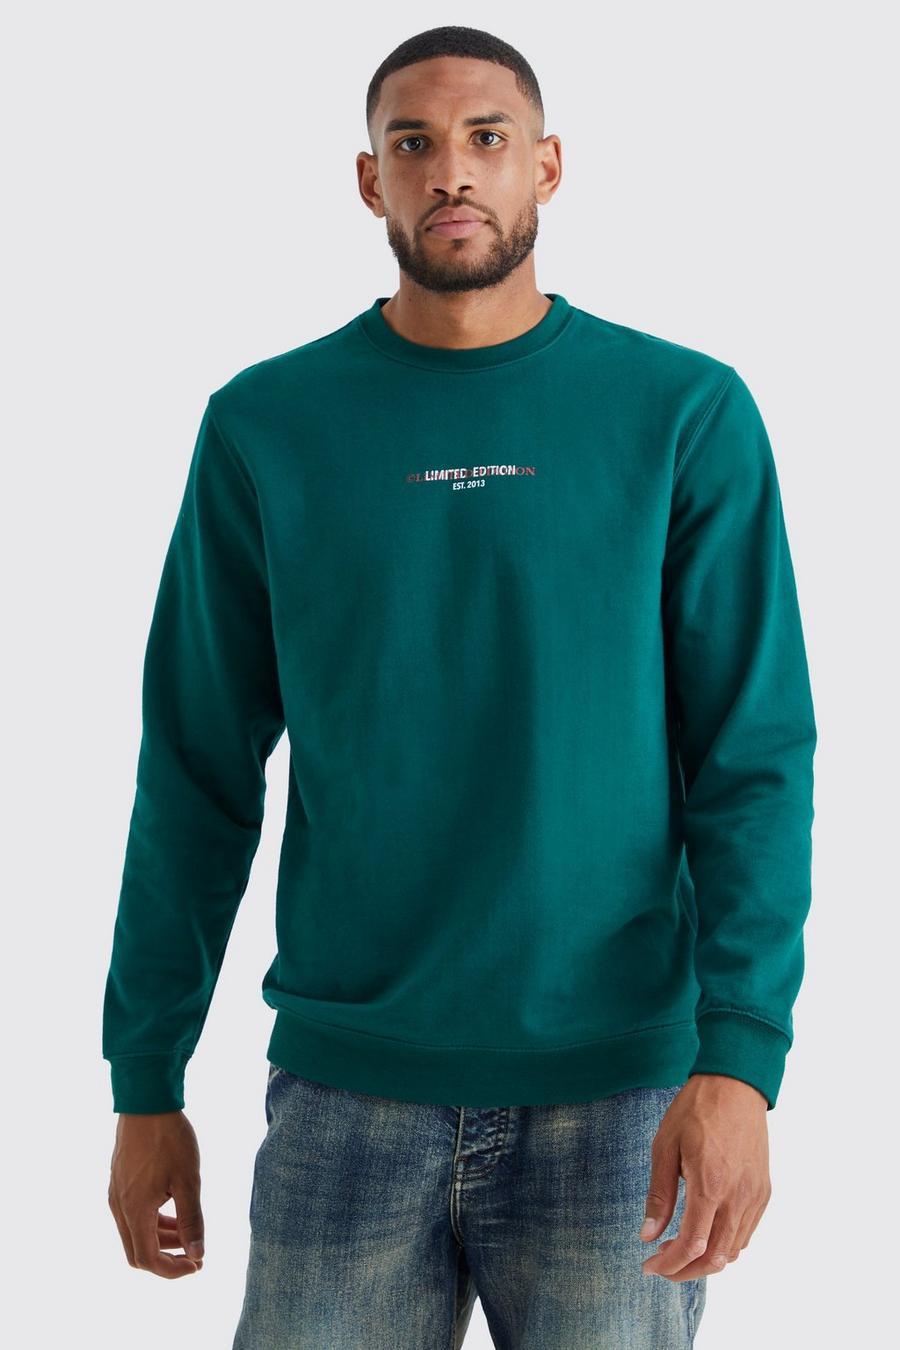 Forest gerde Tall Limited Sweatshirt